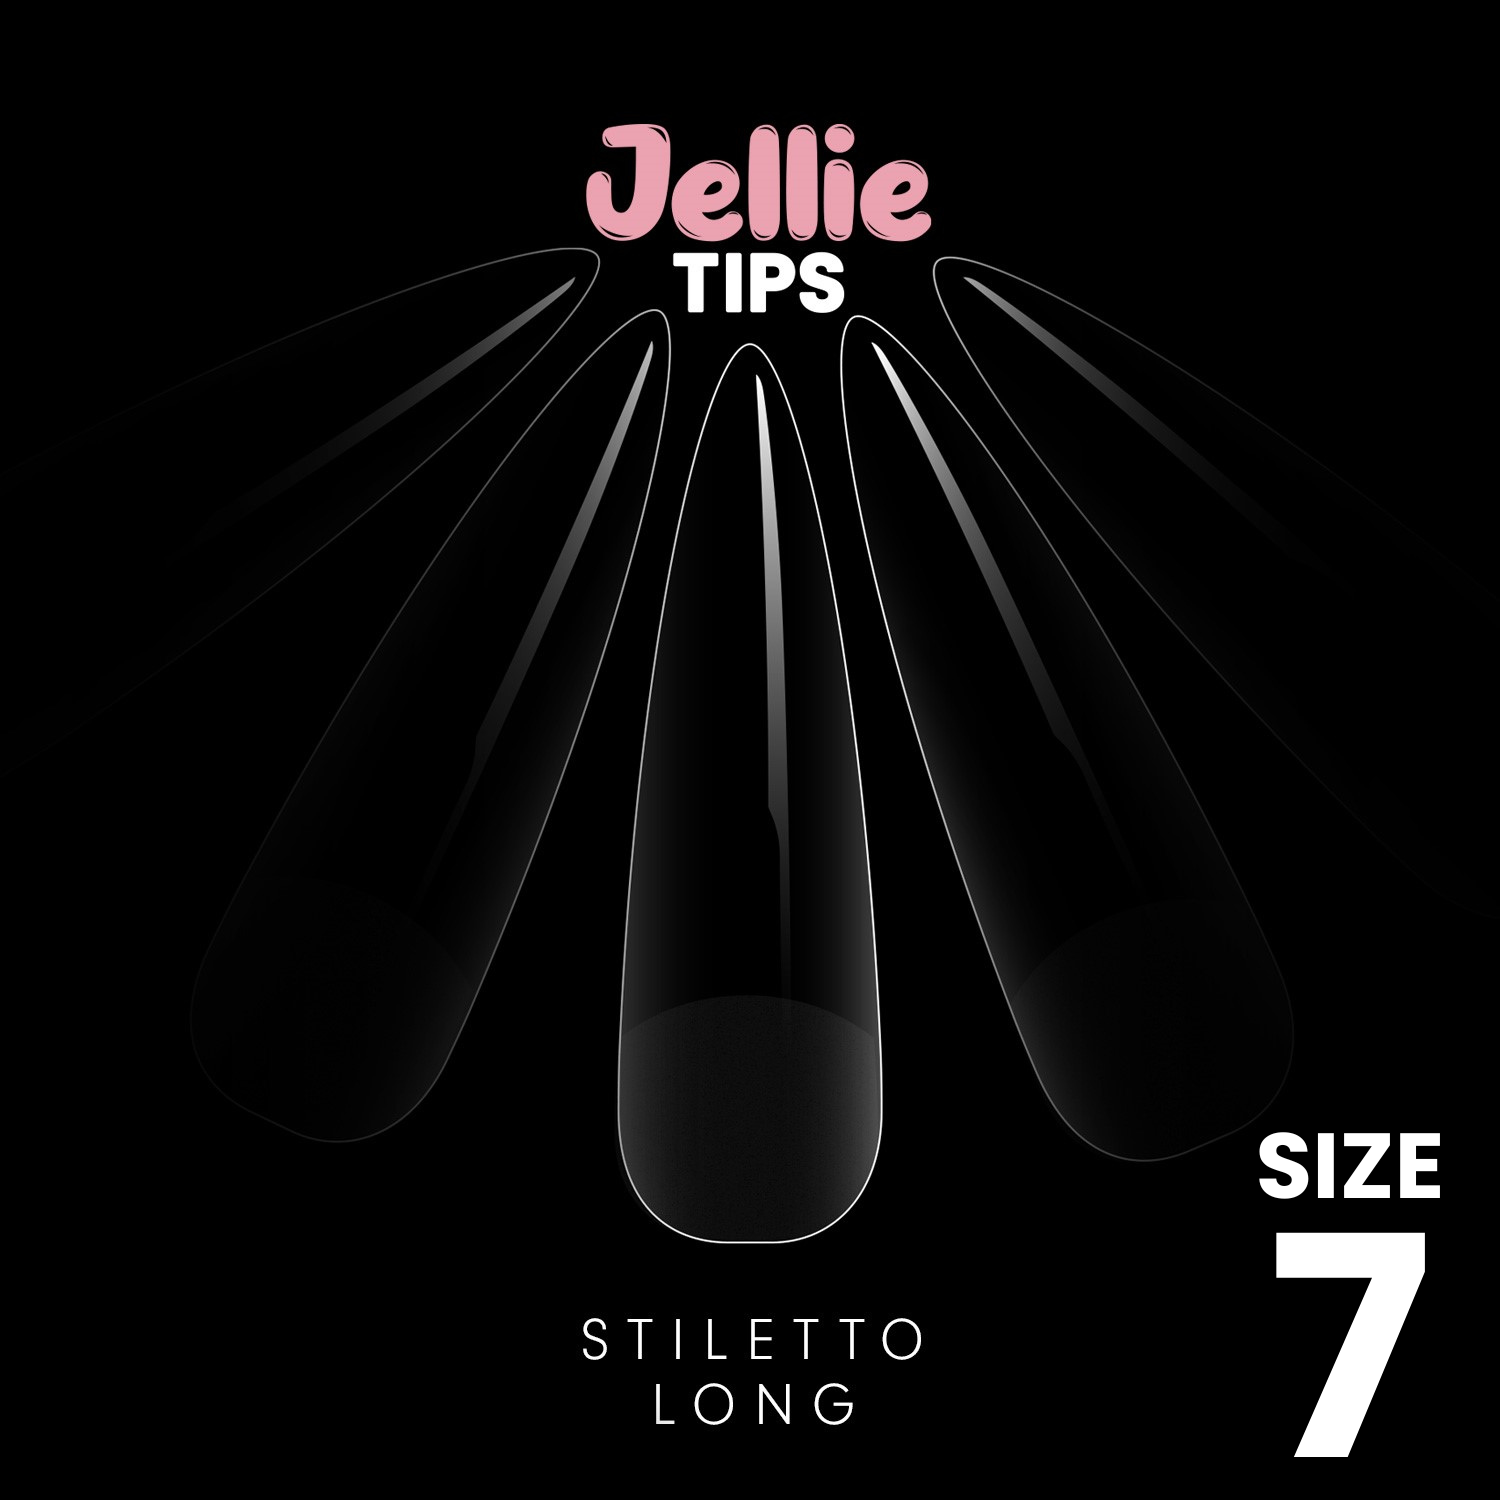 Halo Jellie Nail Tips Stiletto Long, Size 7, 50 One Size